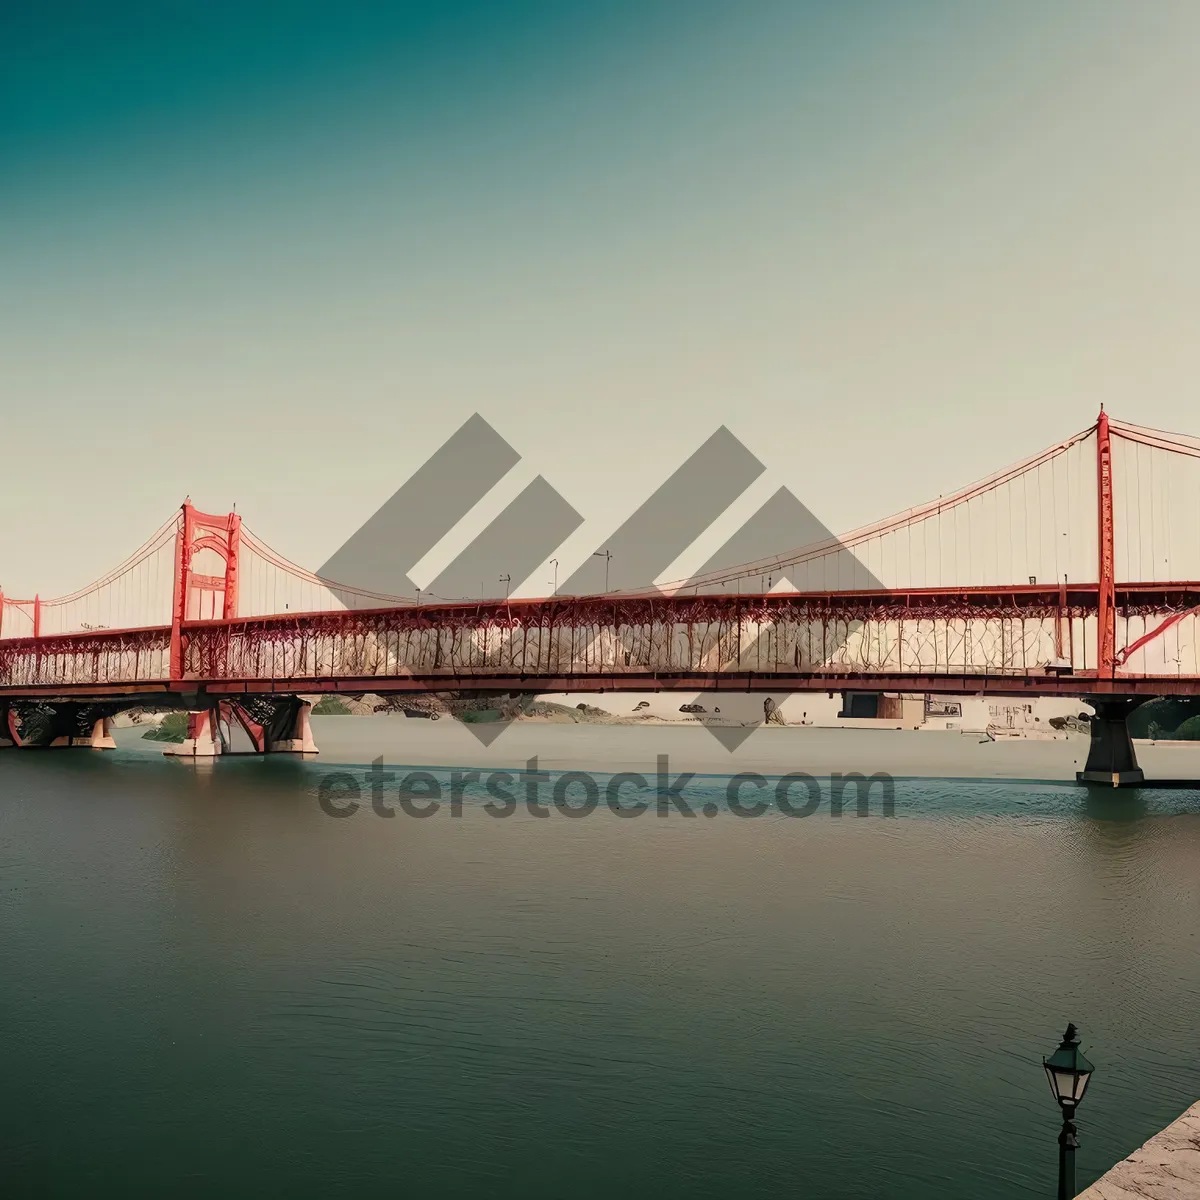 Picture of Golden Gate Bridge: Iconic Suspension Bridge Over the Pacific